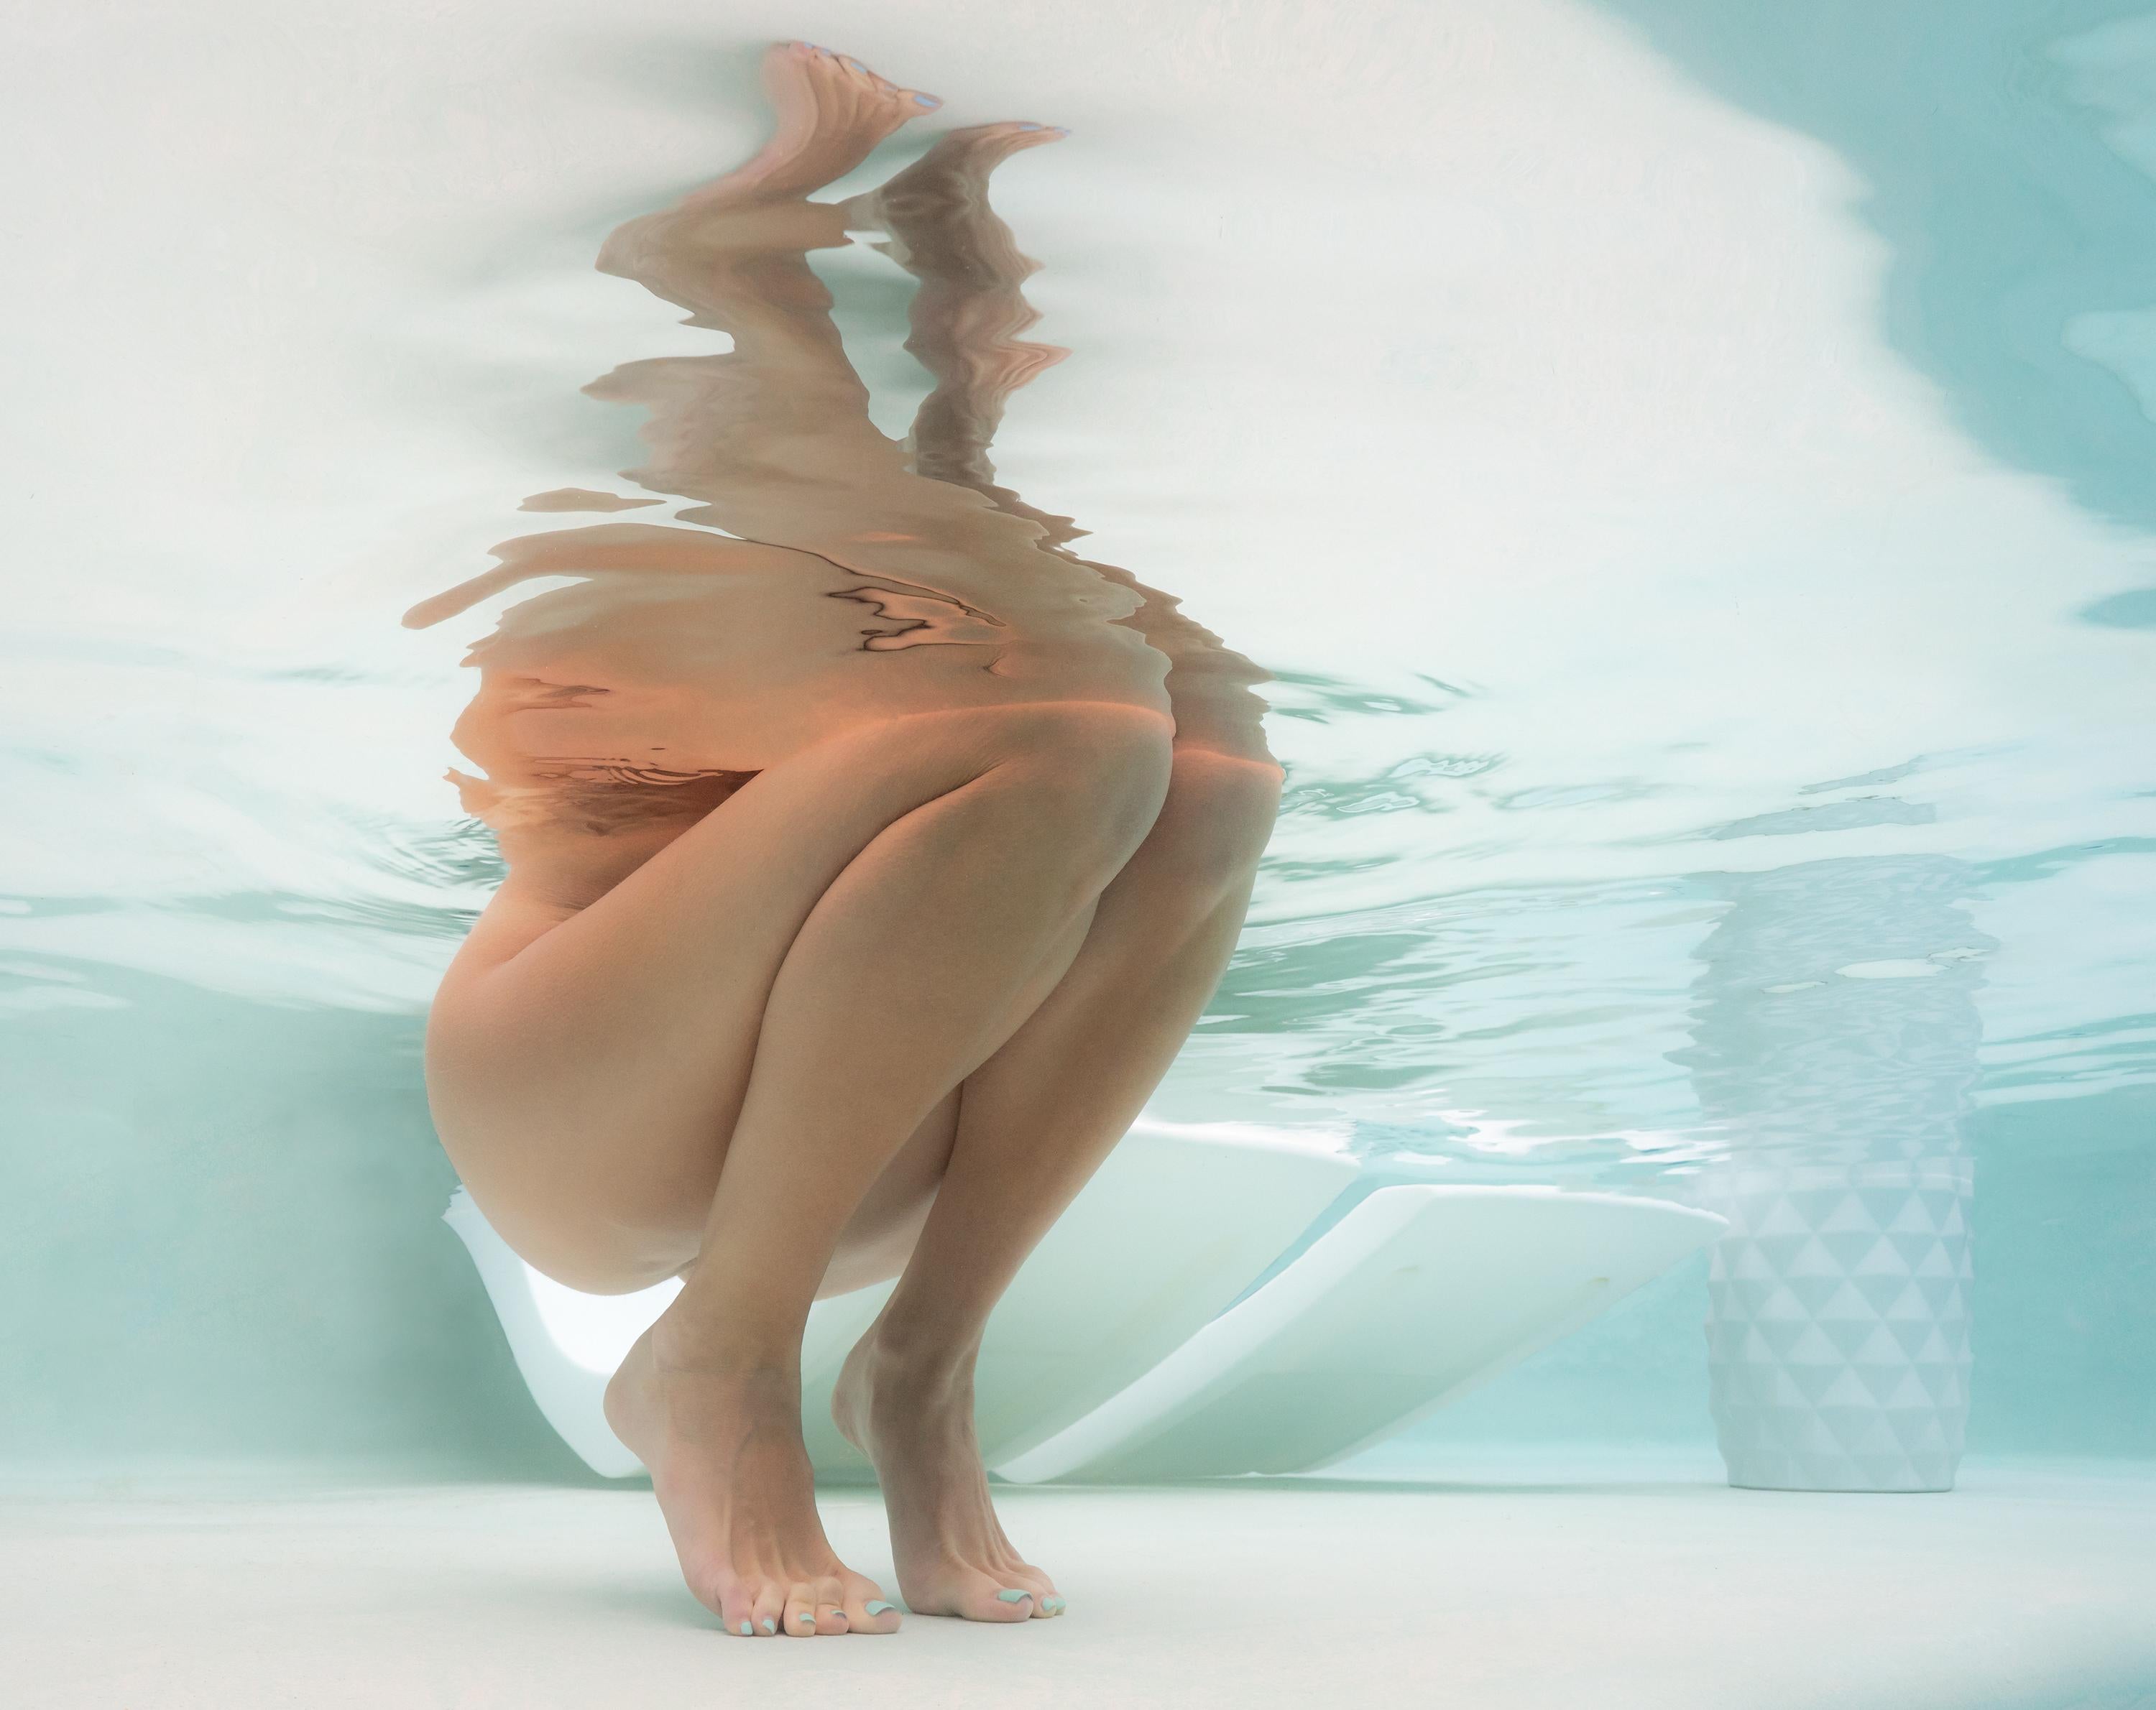 Pristine - underwater nude photograph - archival pigment print 24.5 x 35